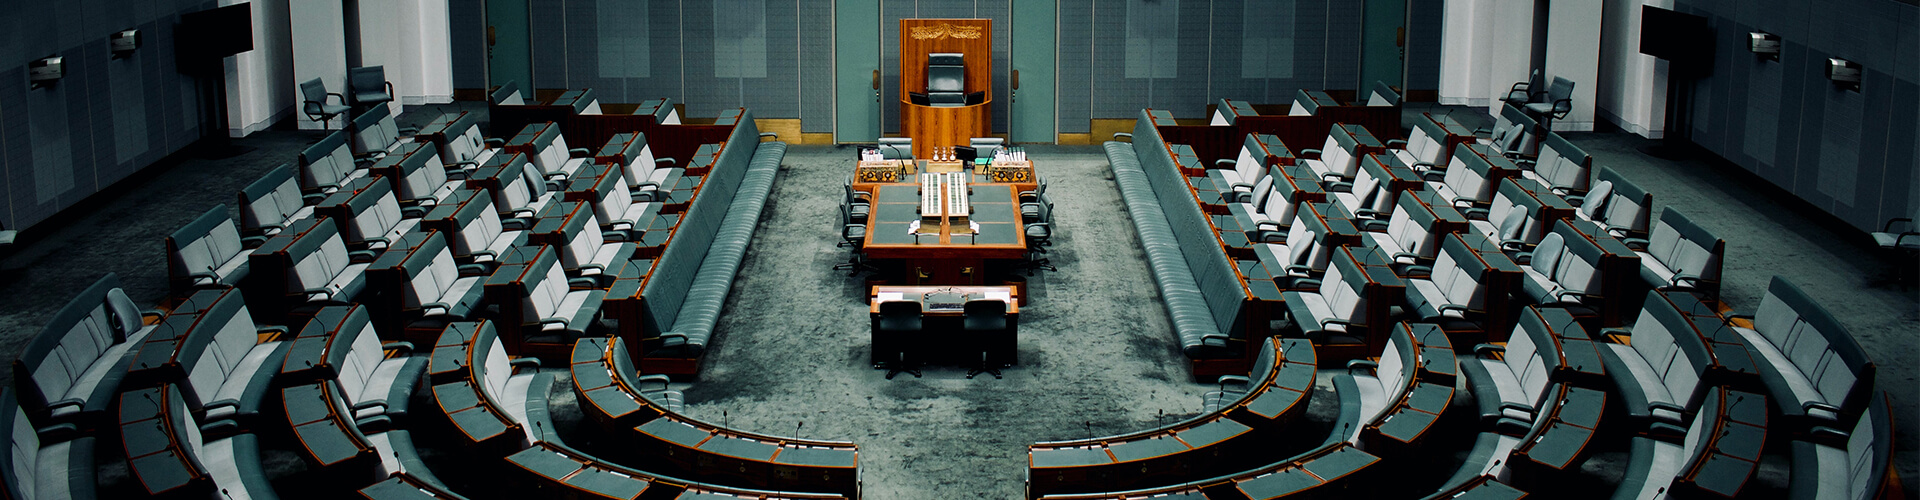 parliament house view 